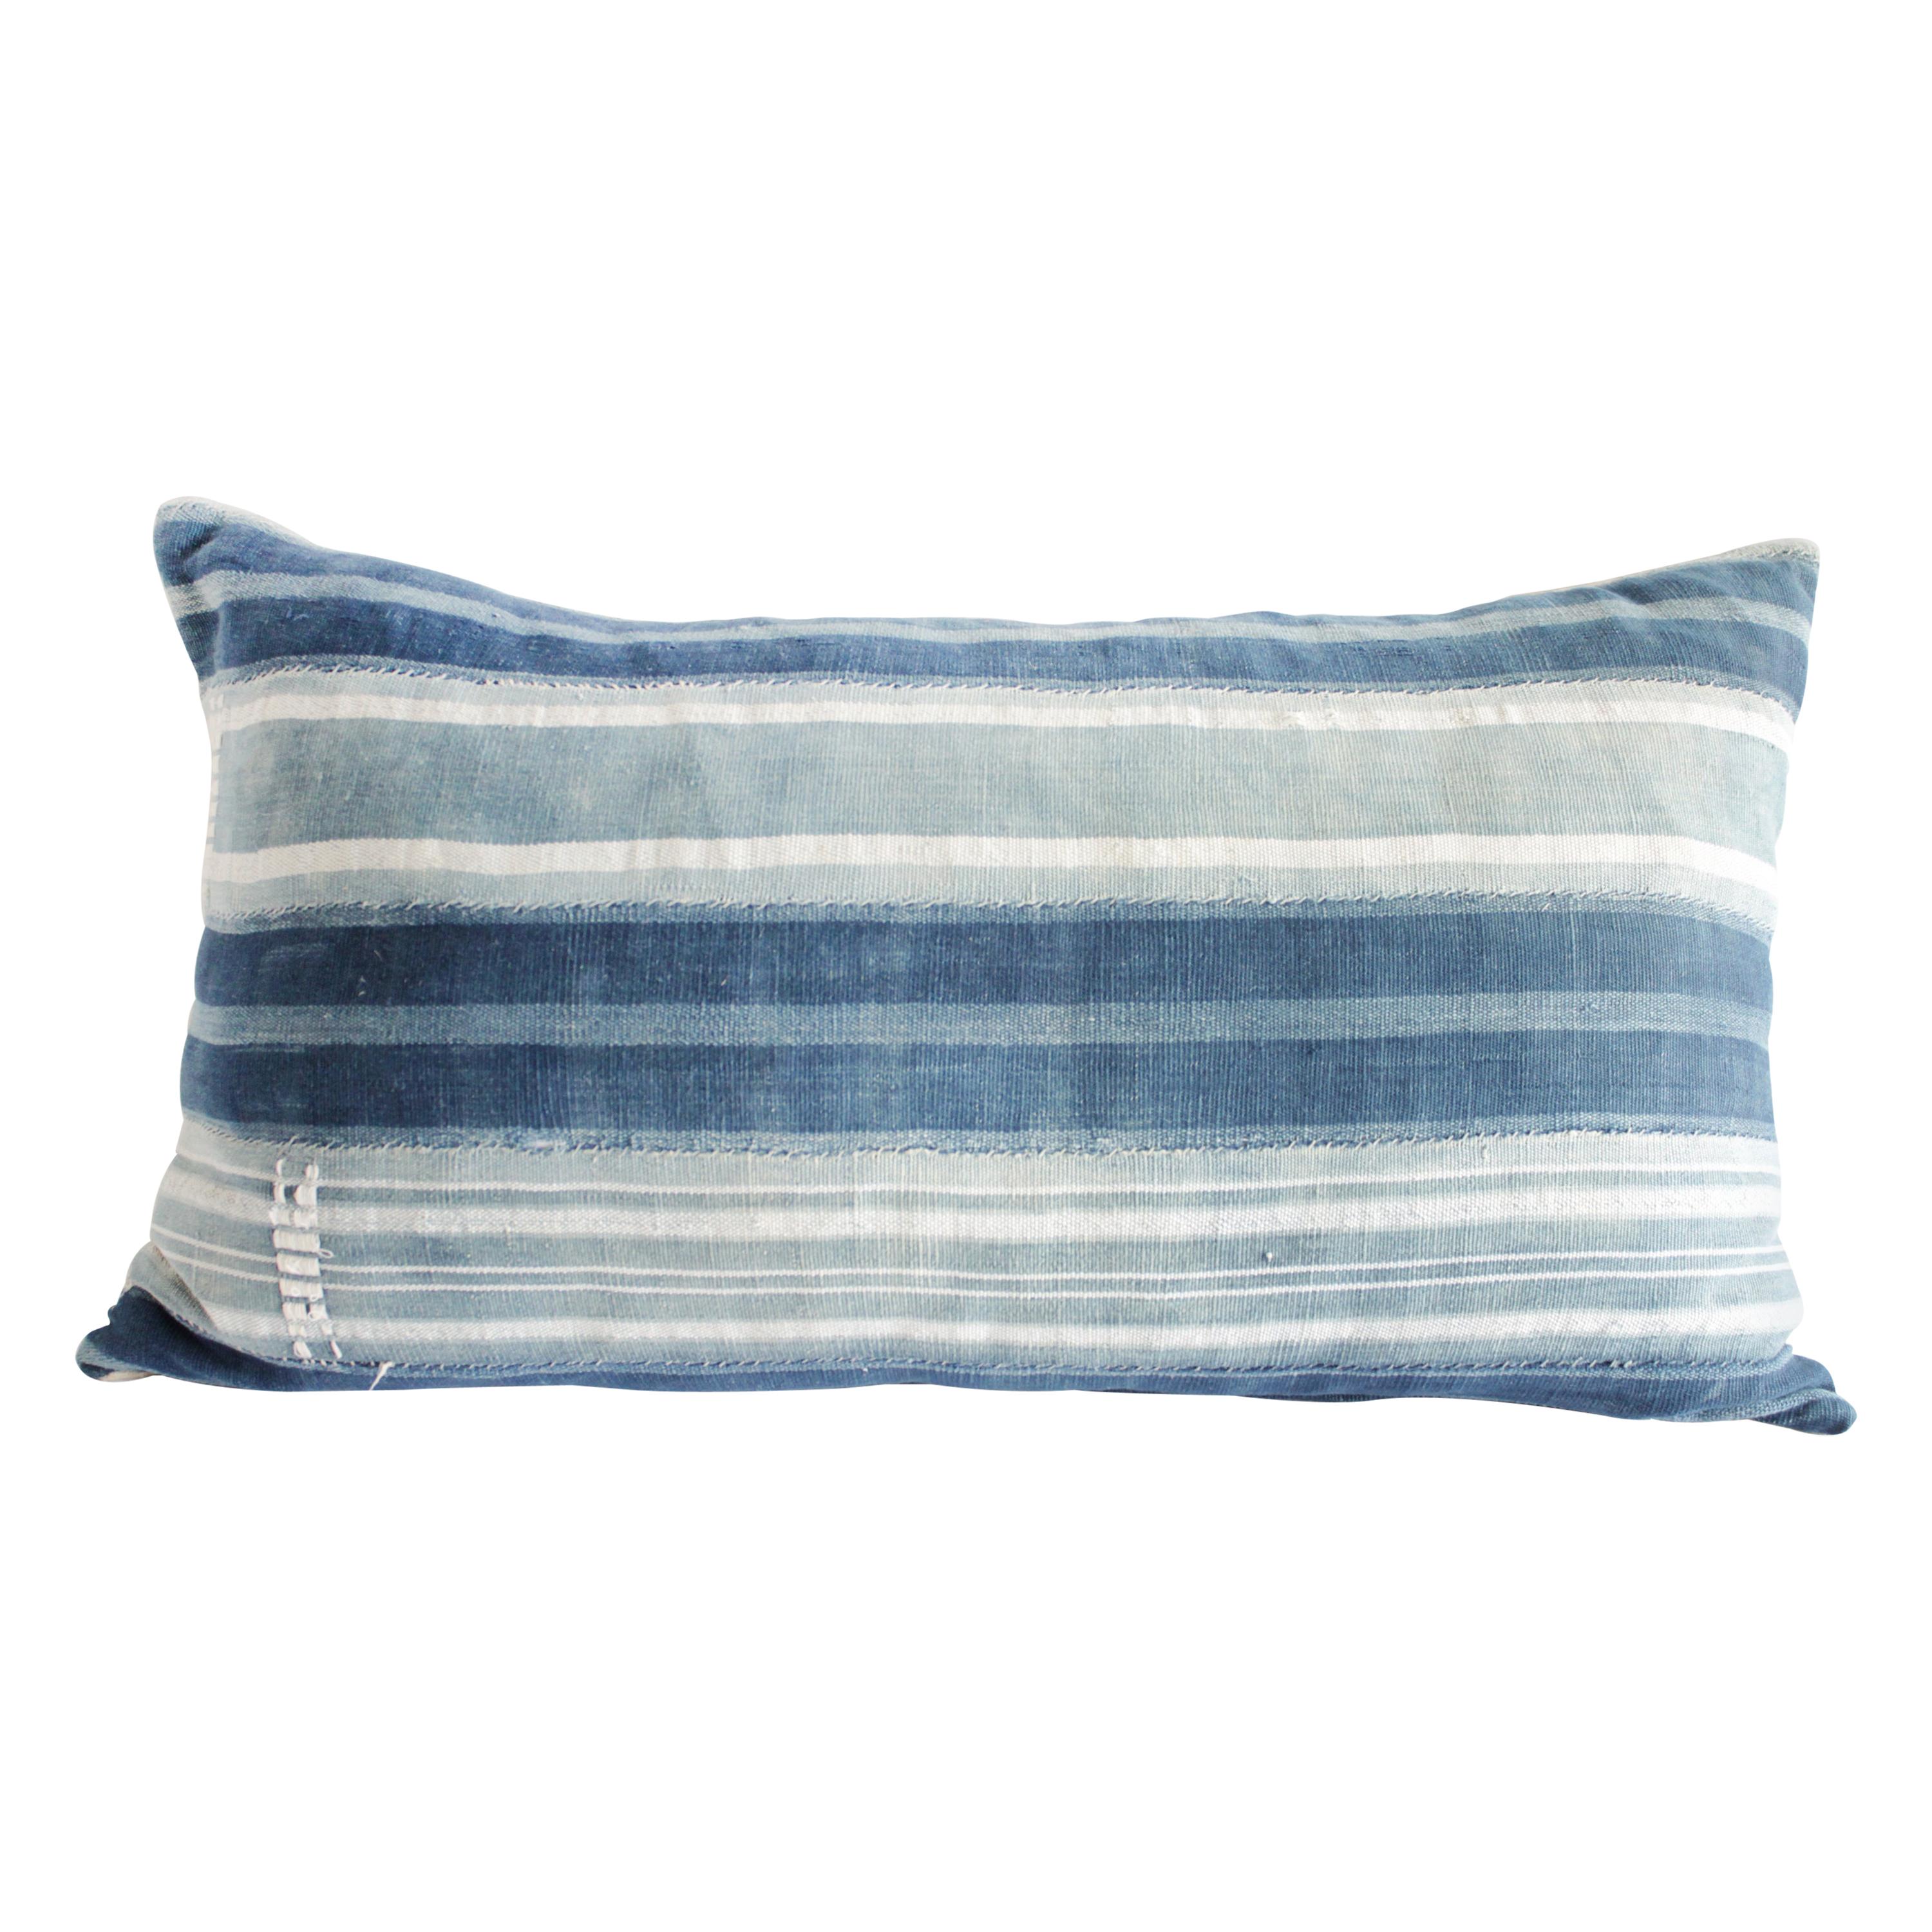 Vintage Indigo Blue and White Stirpe Mudcloth Lumbar Pillow